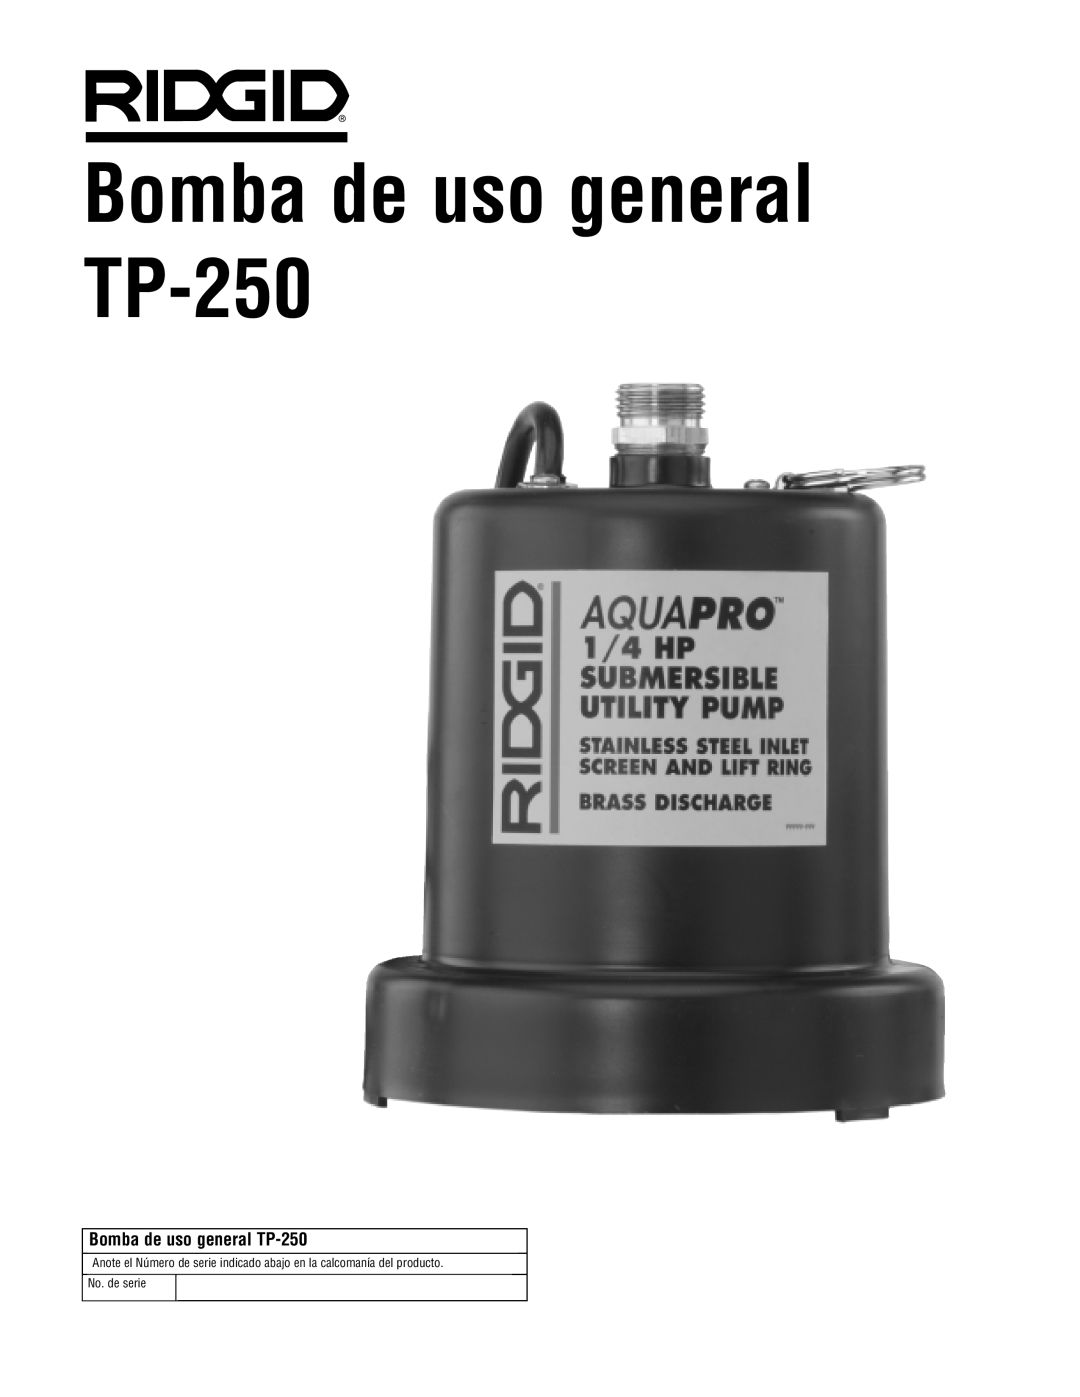 RIDGID manual Bomba de uso general TP-250 